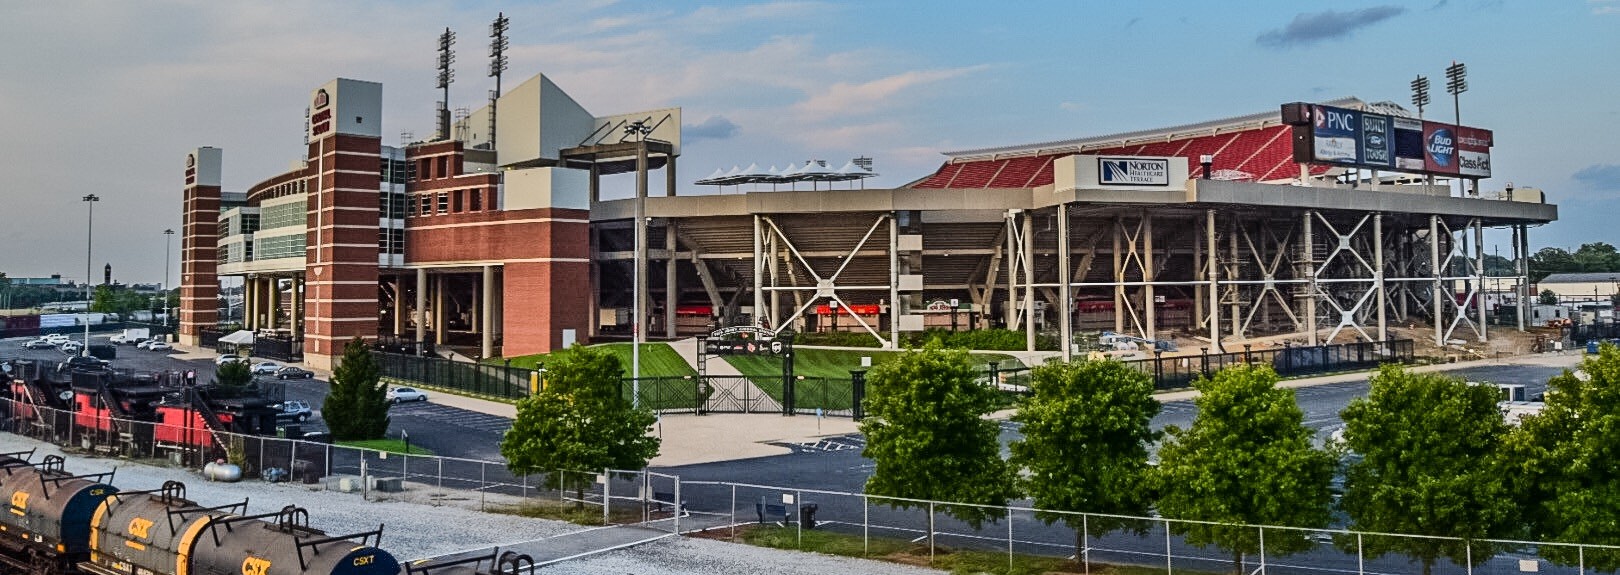 Papa John's Cardinal Stadium Photo by Seth Bloom. 2015. Fitted